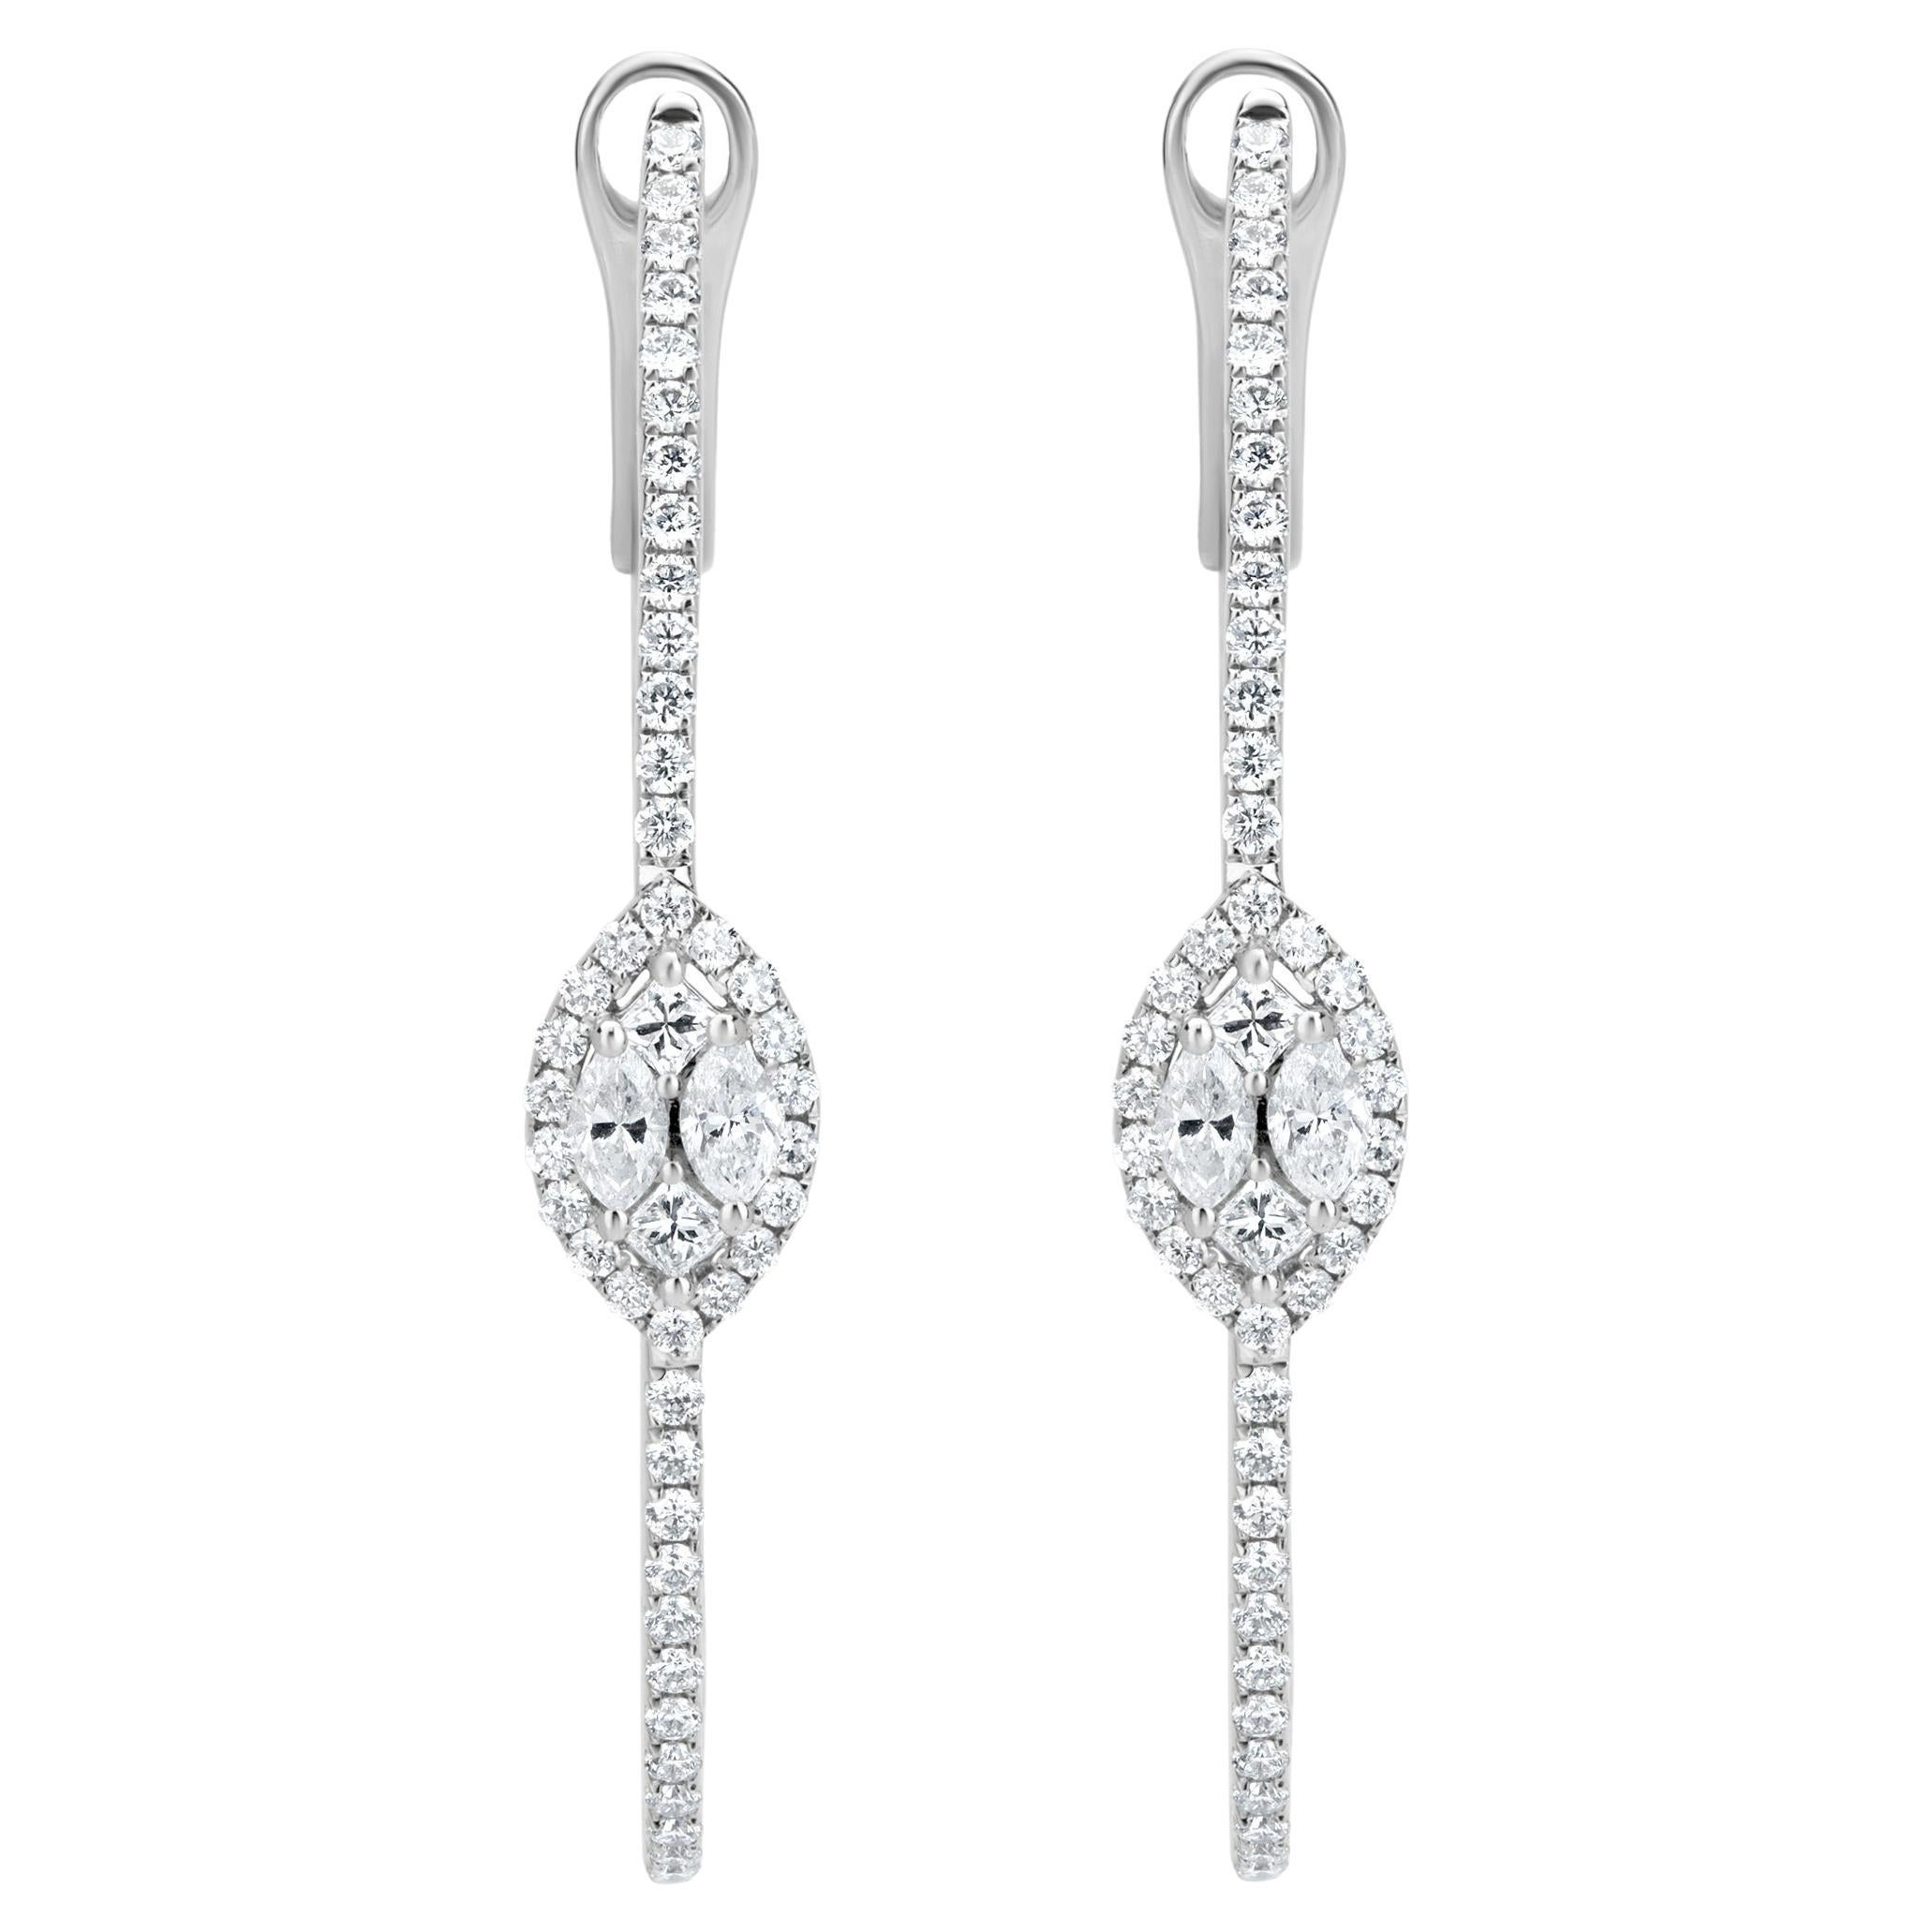 Luxle 1.61 Cttw. Diamond Inside-Out Hoop Earrings in 18k White Gold For Sale